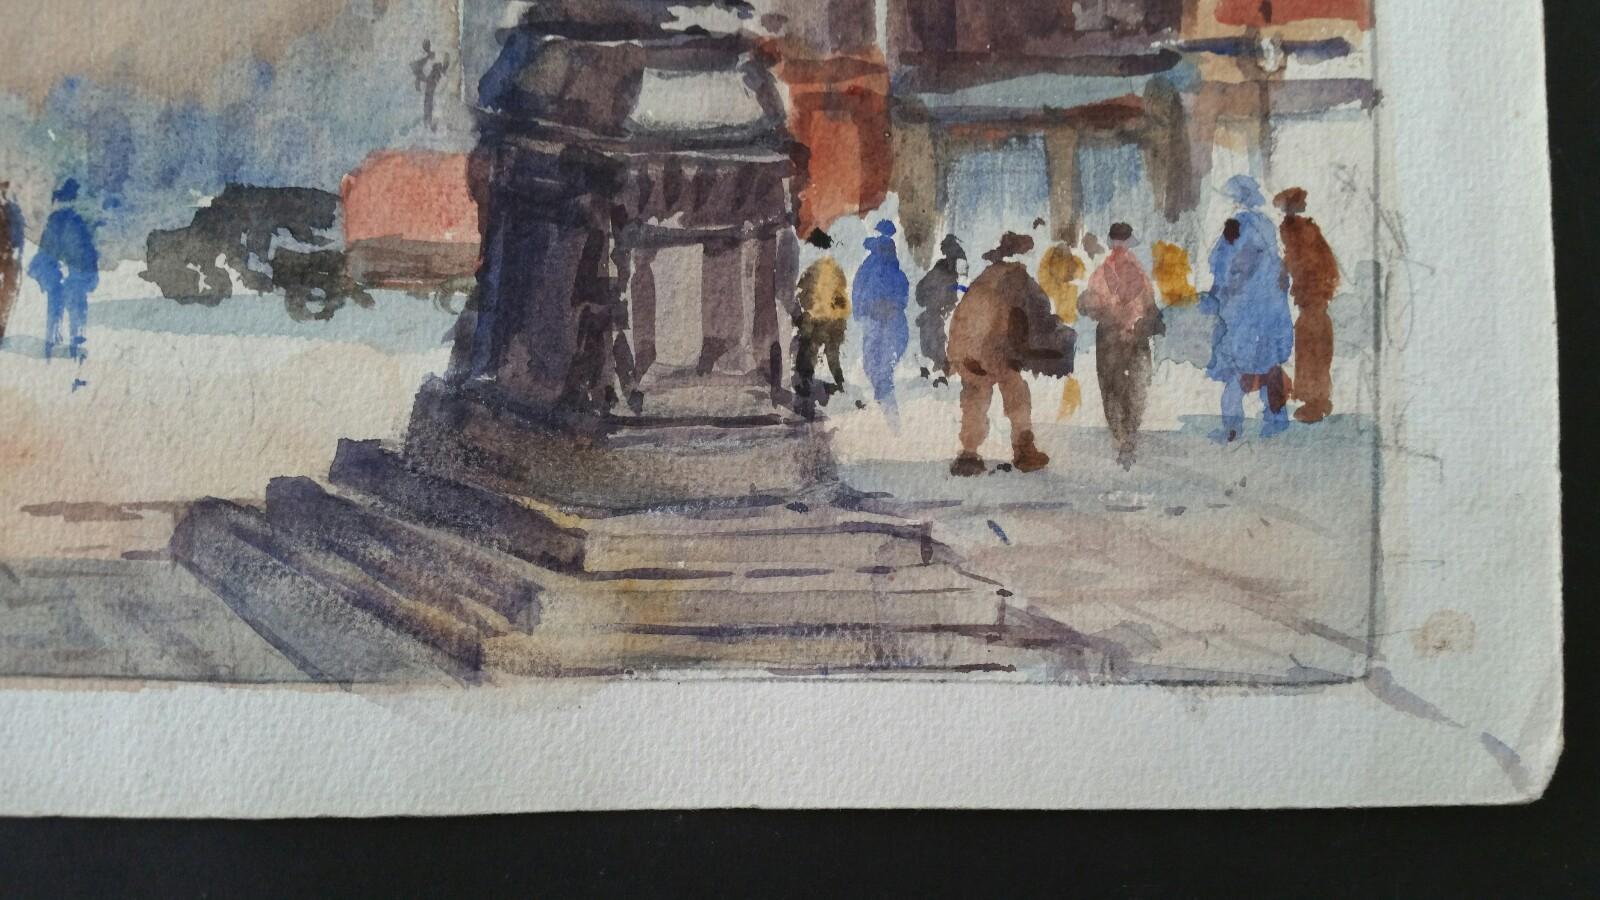 Mid 20th Century, Belgium, Bruges, The Market Square - Impressionist Art by Leonard Machin Rowe